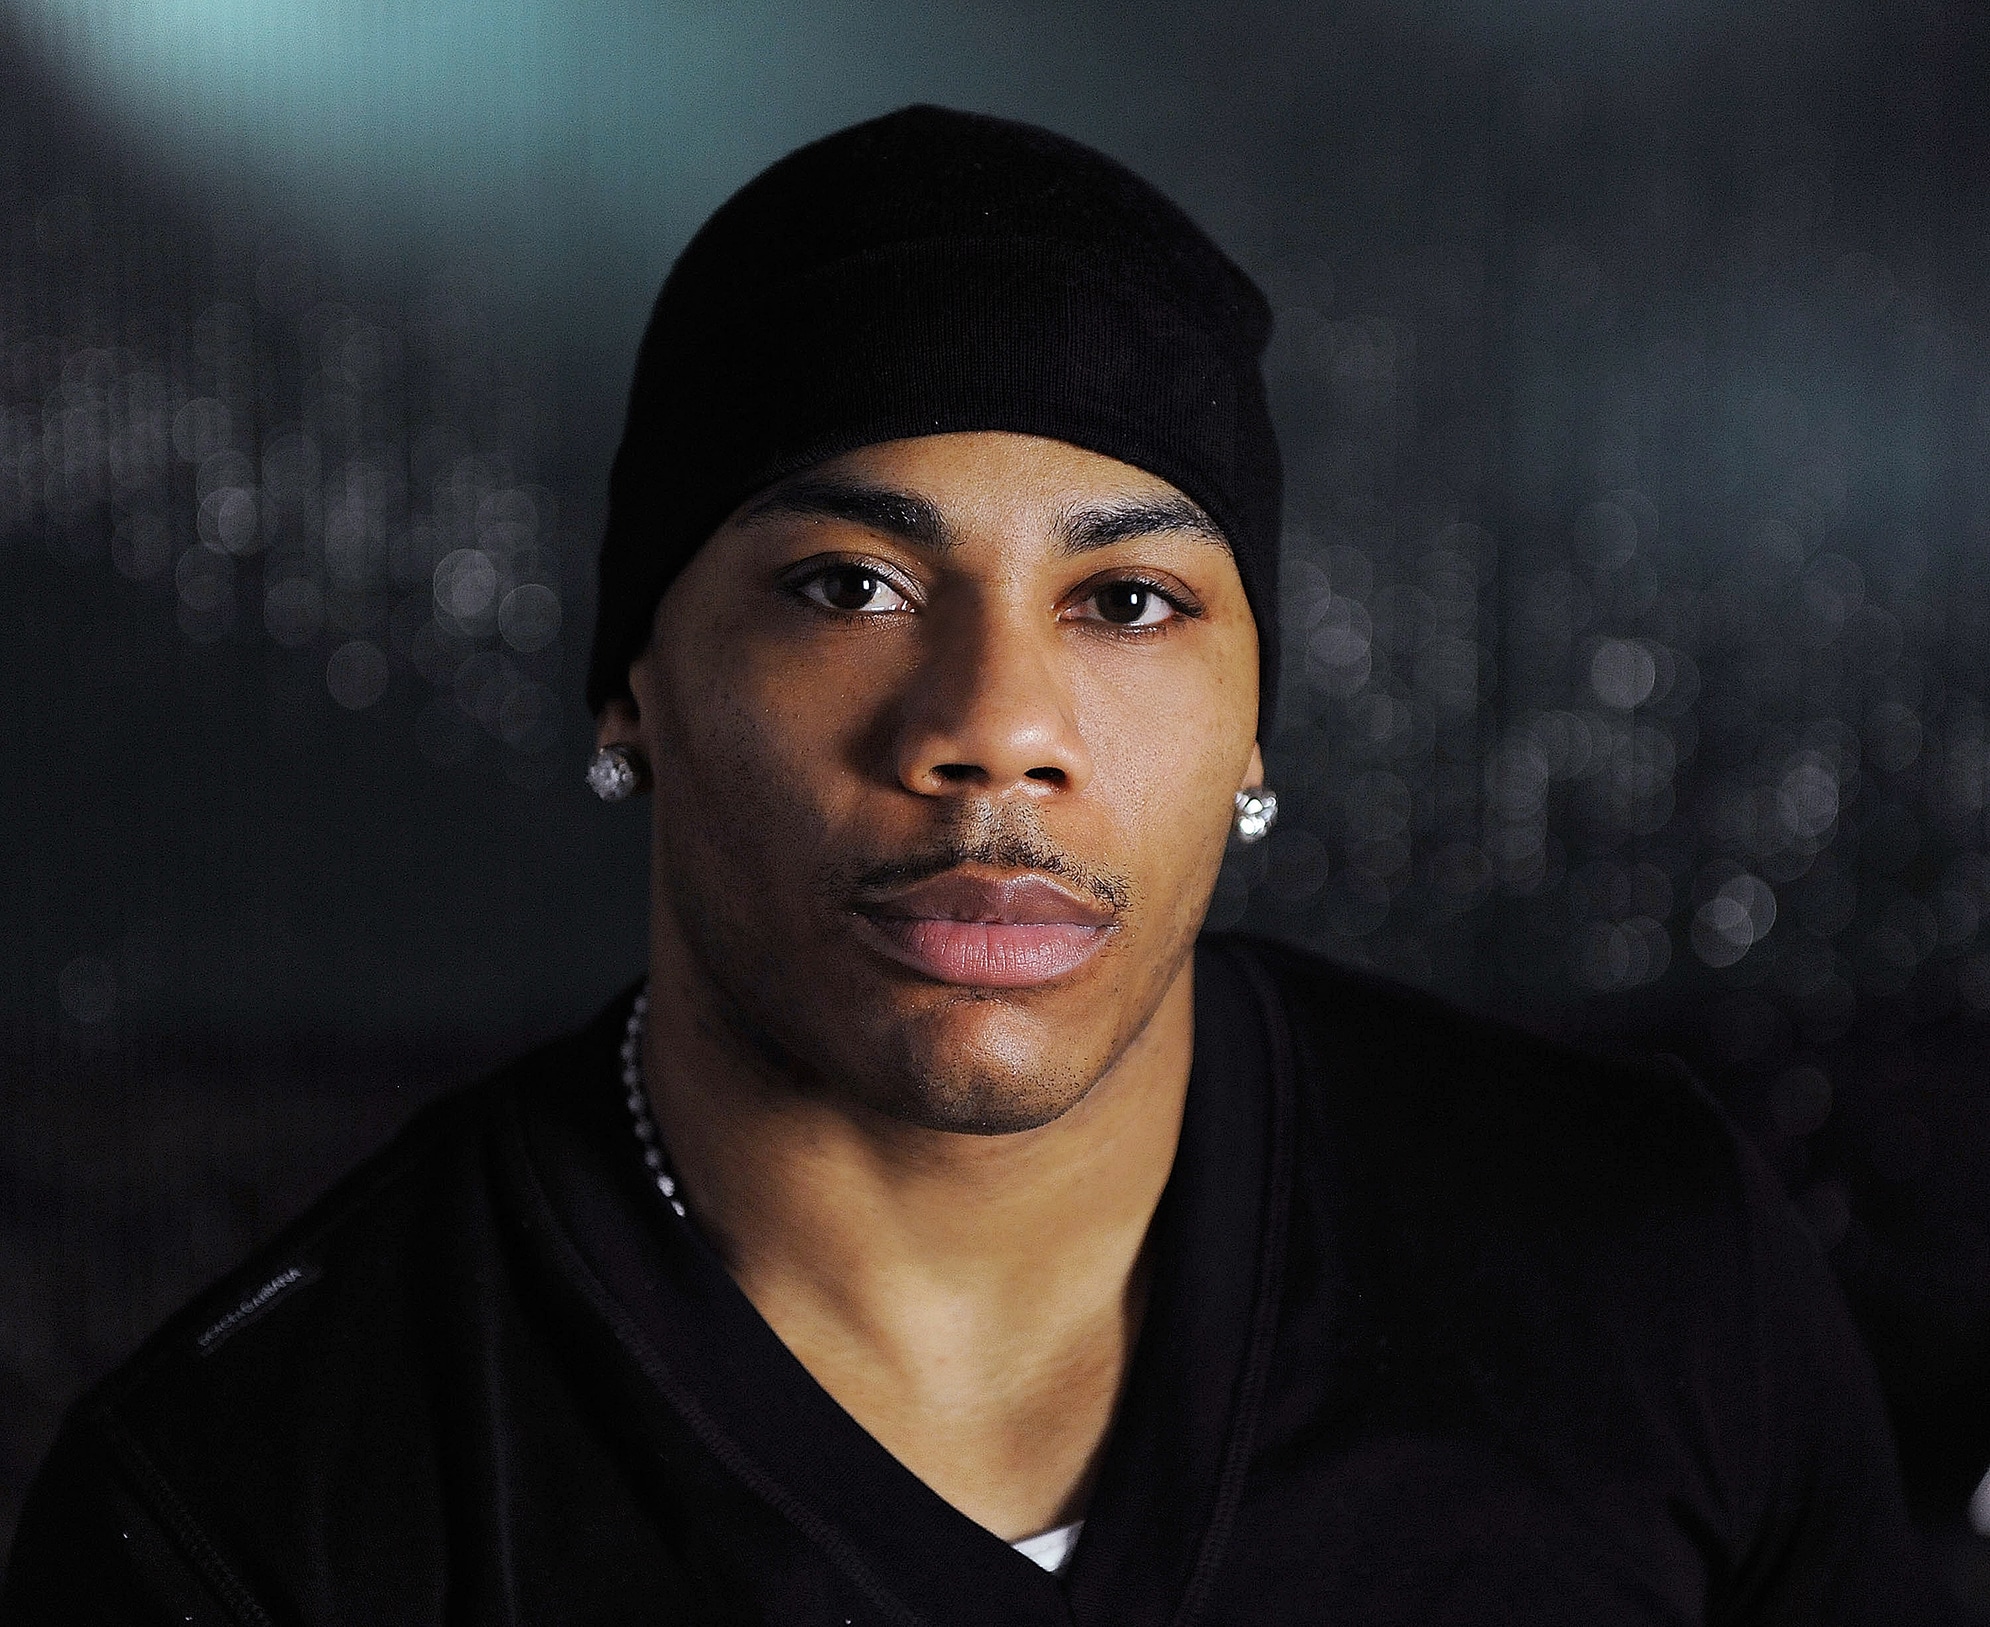 Nelly arrest: US rapper arrested on suspicion of rape 